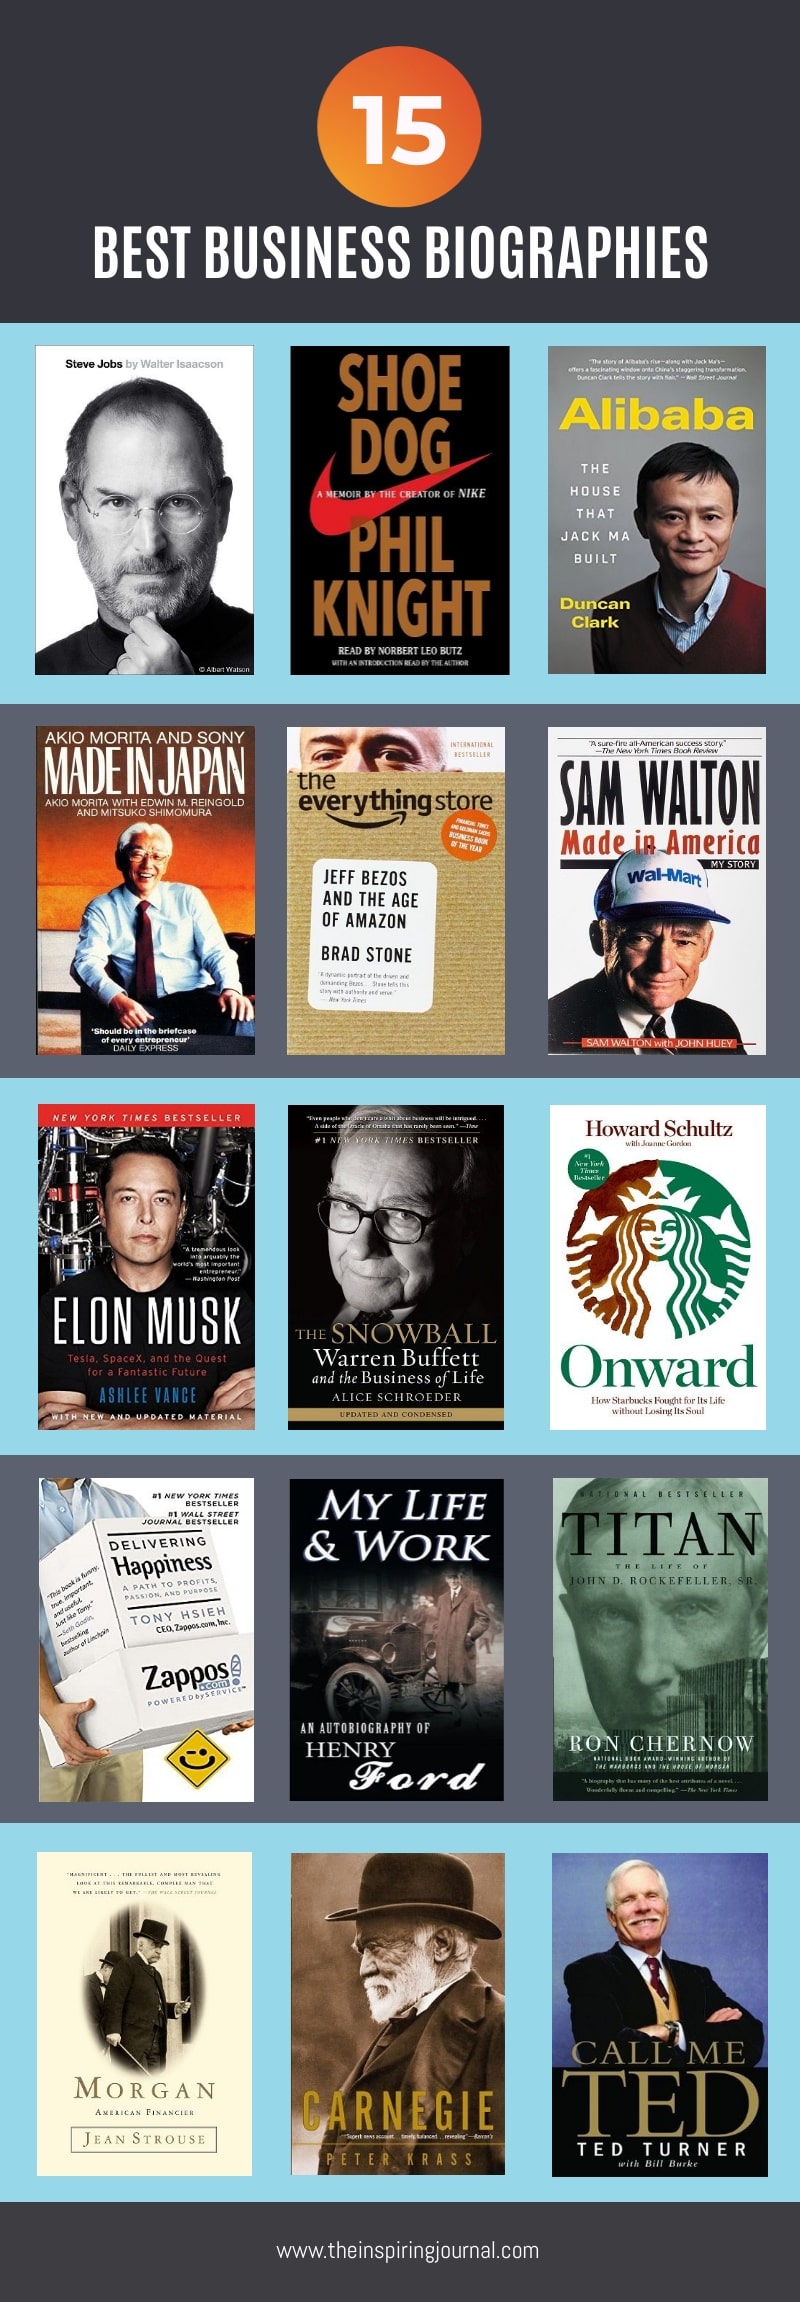 best business biographies goodreads